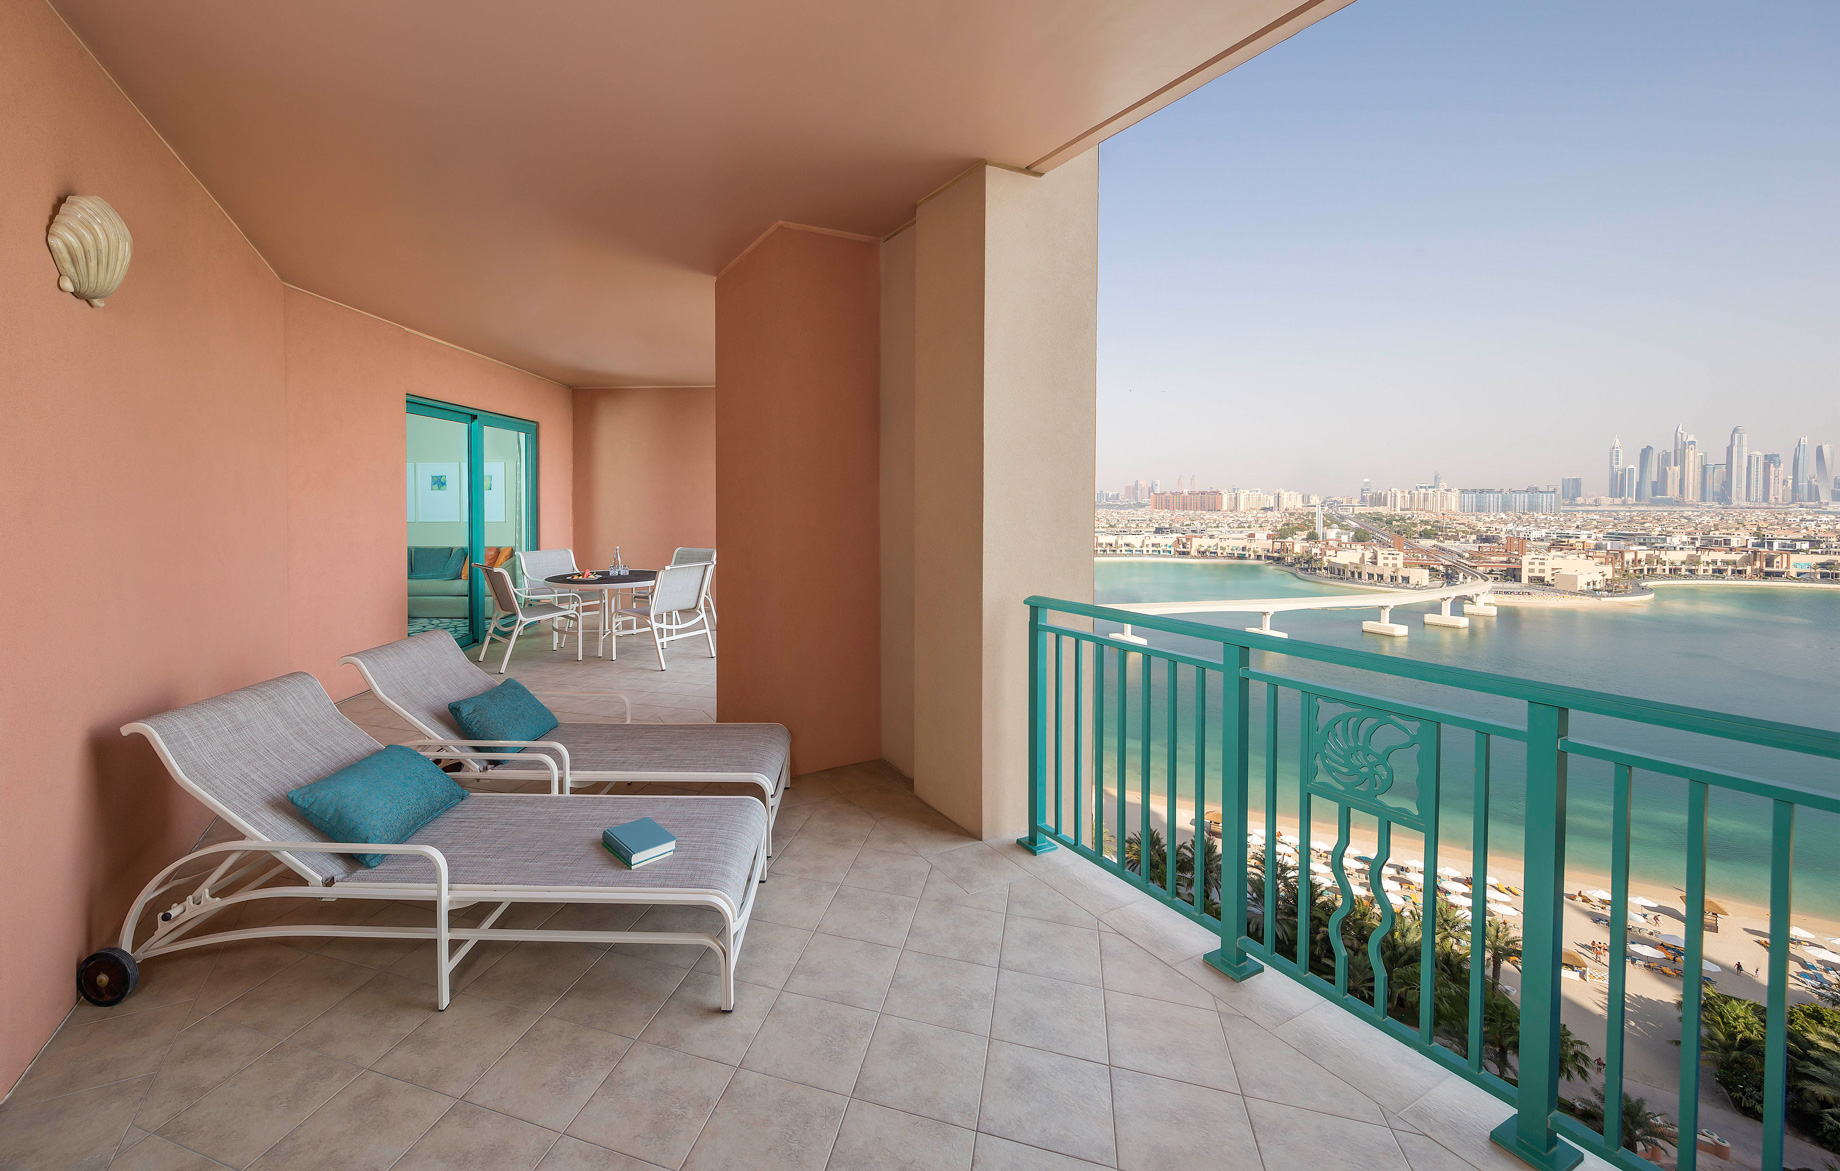 Atlantis The Palm Resort – Crescent Rd, Dubai, UAE – Terrace Club Suite Balcony